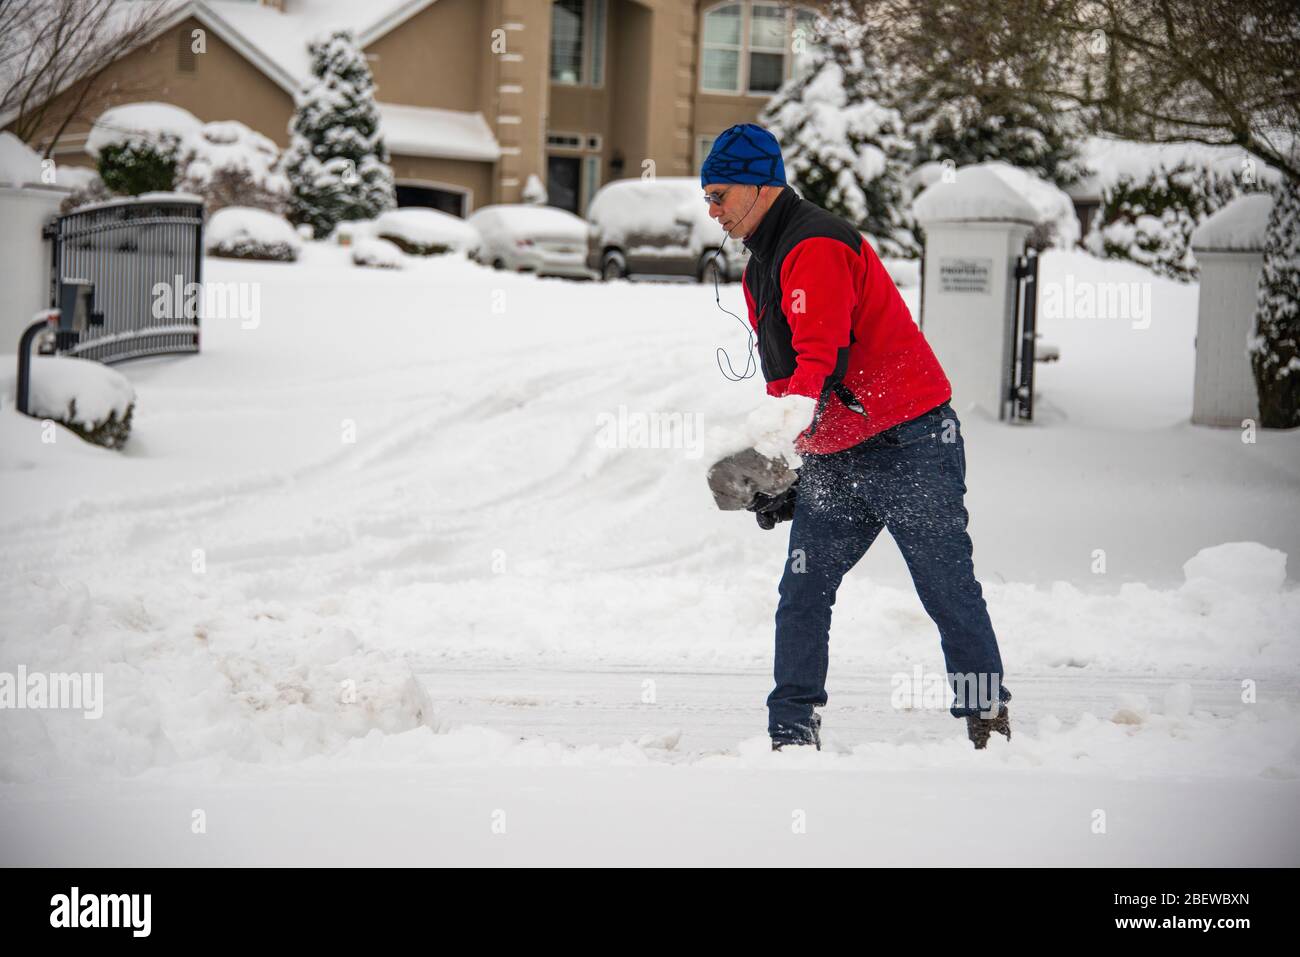 Man shoveling snow Stock Photo